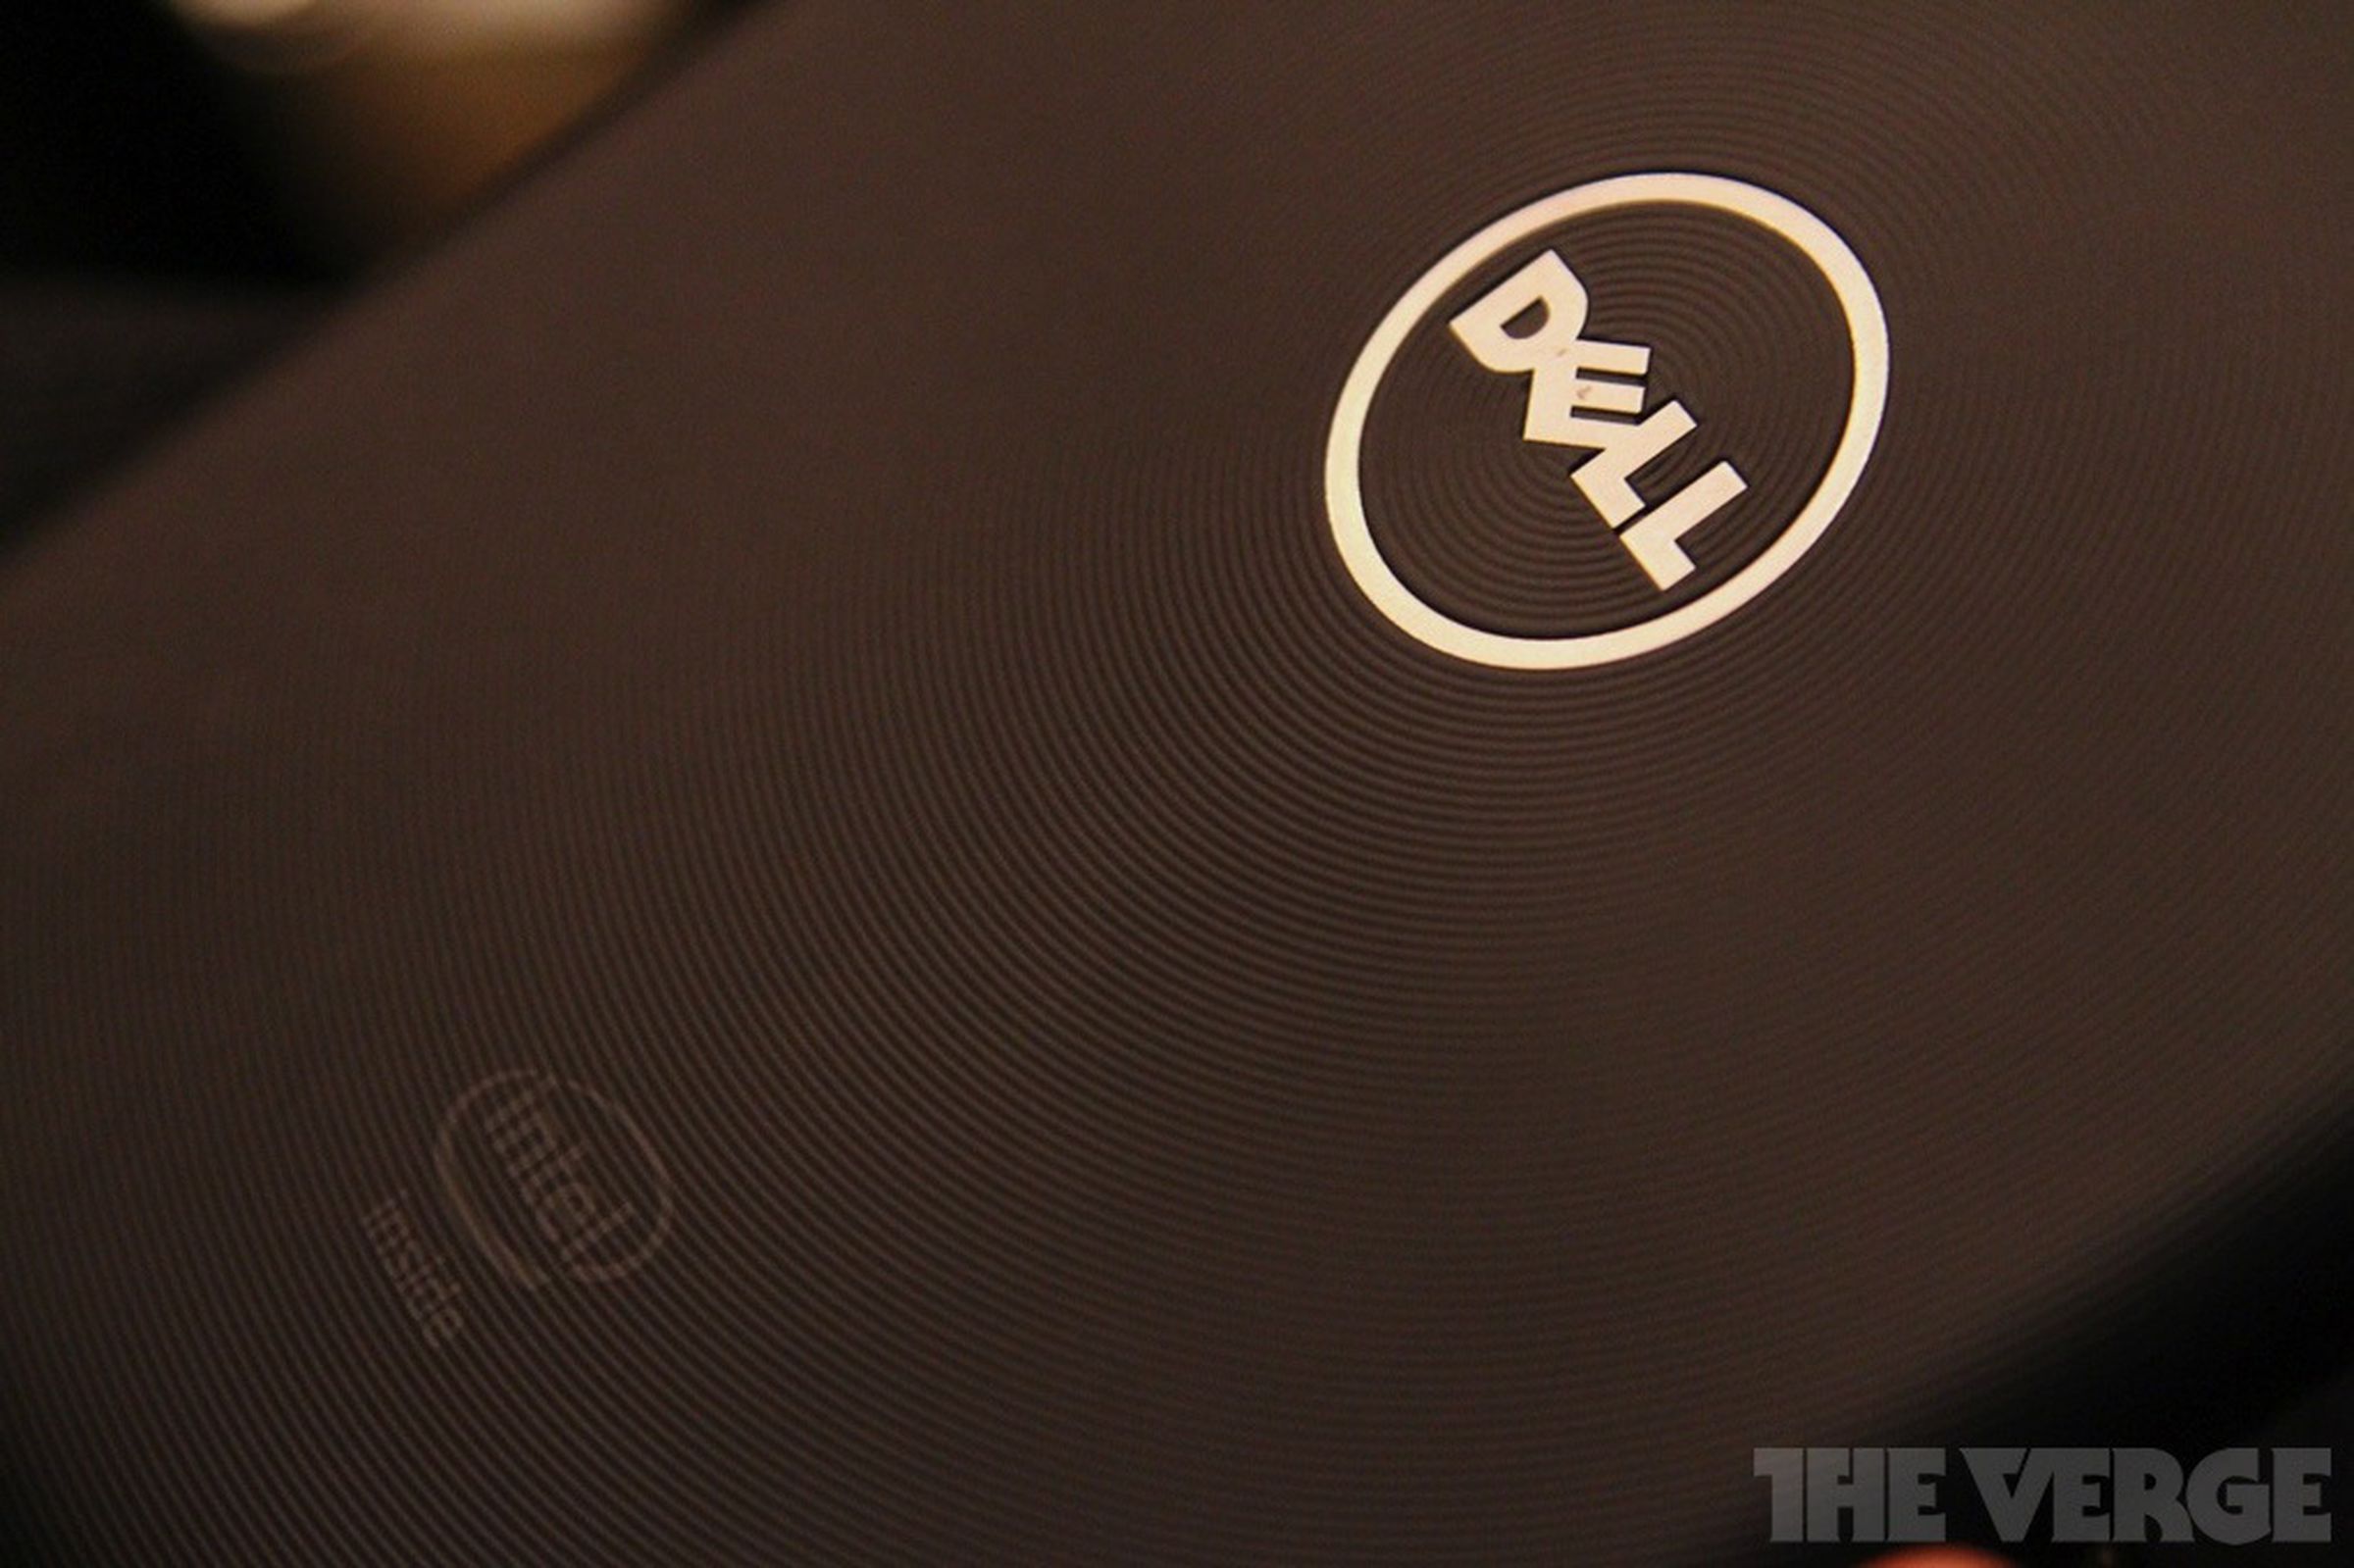 Dell Venue tablet pictures